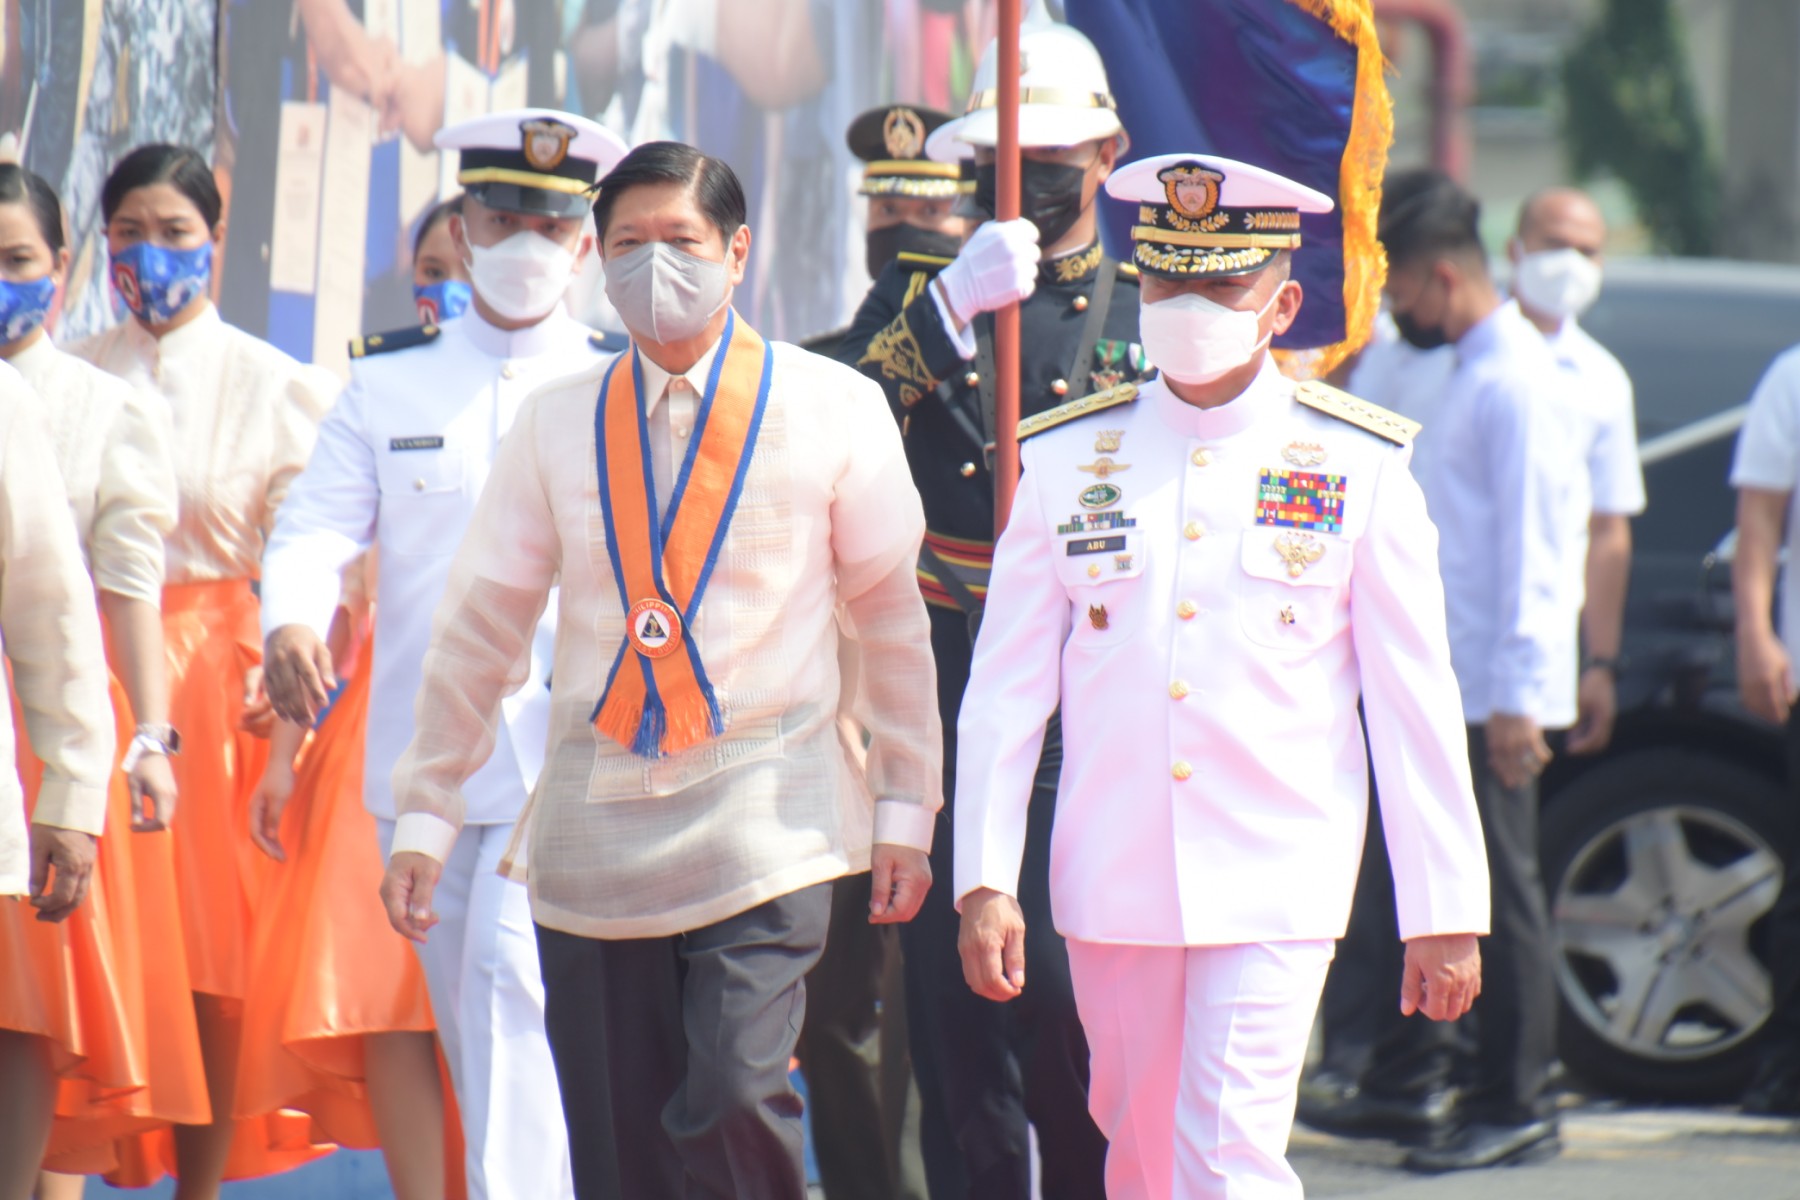 President Ferdinand Marcos Jr. attends 121st anniversary of the PH Coast Guard